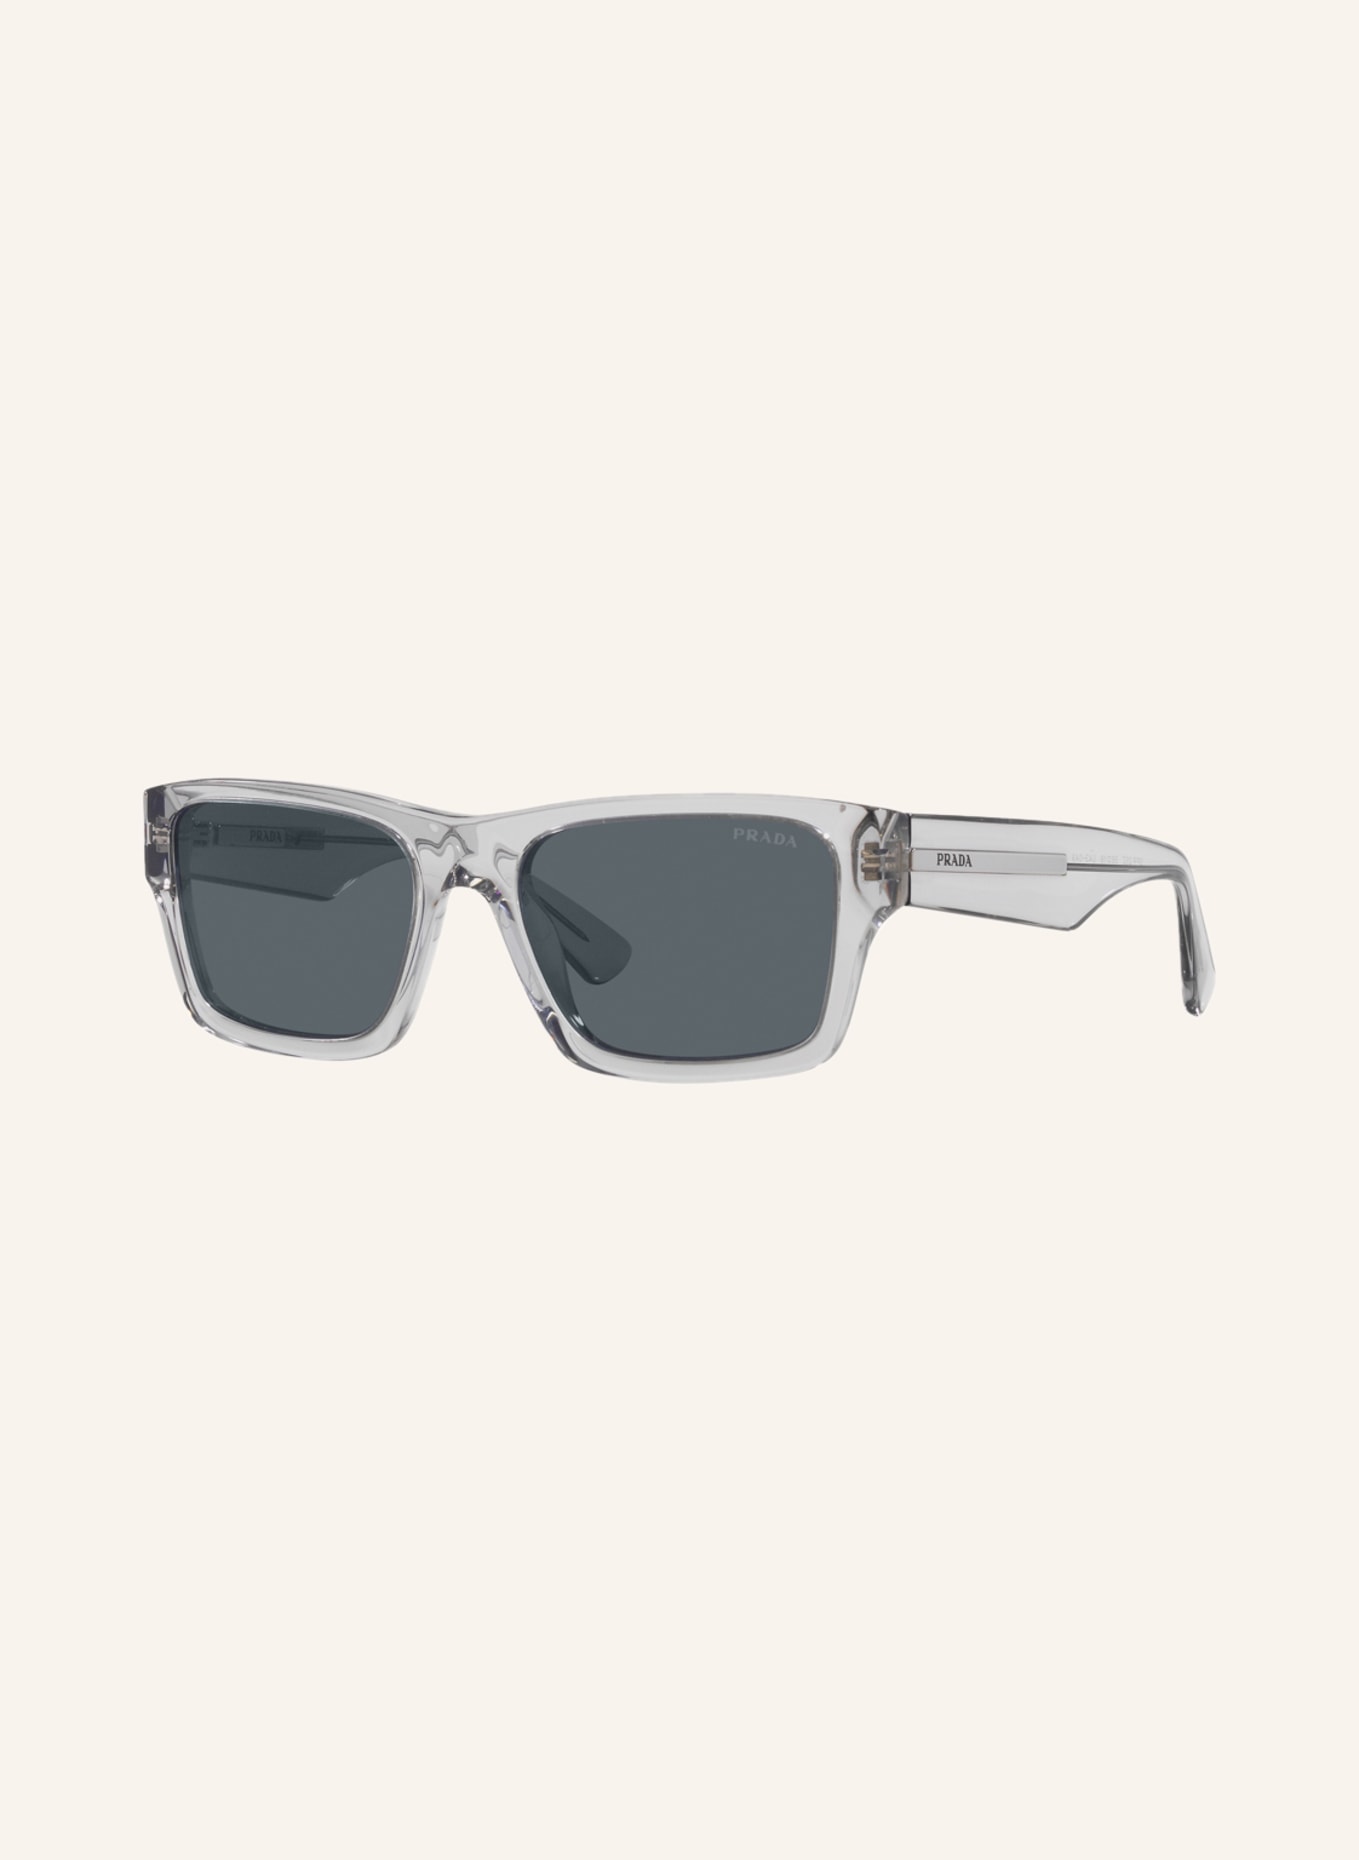 Prada Linea Rossa PS 51YS 61 Light Green Mirror Blue & Silver Sunglasses |  Sunglass Hut USA